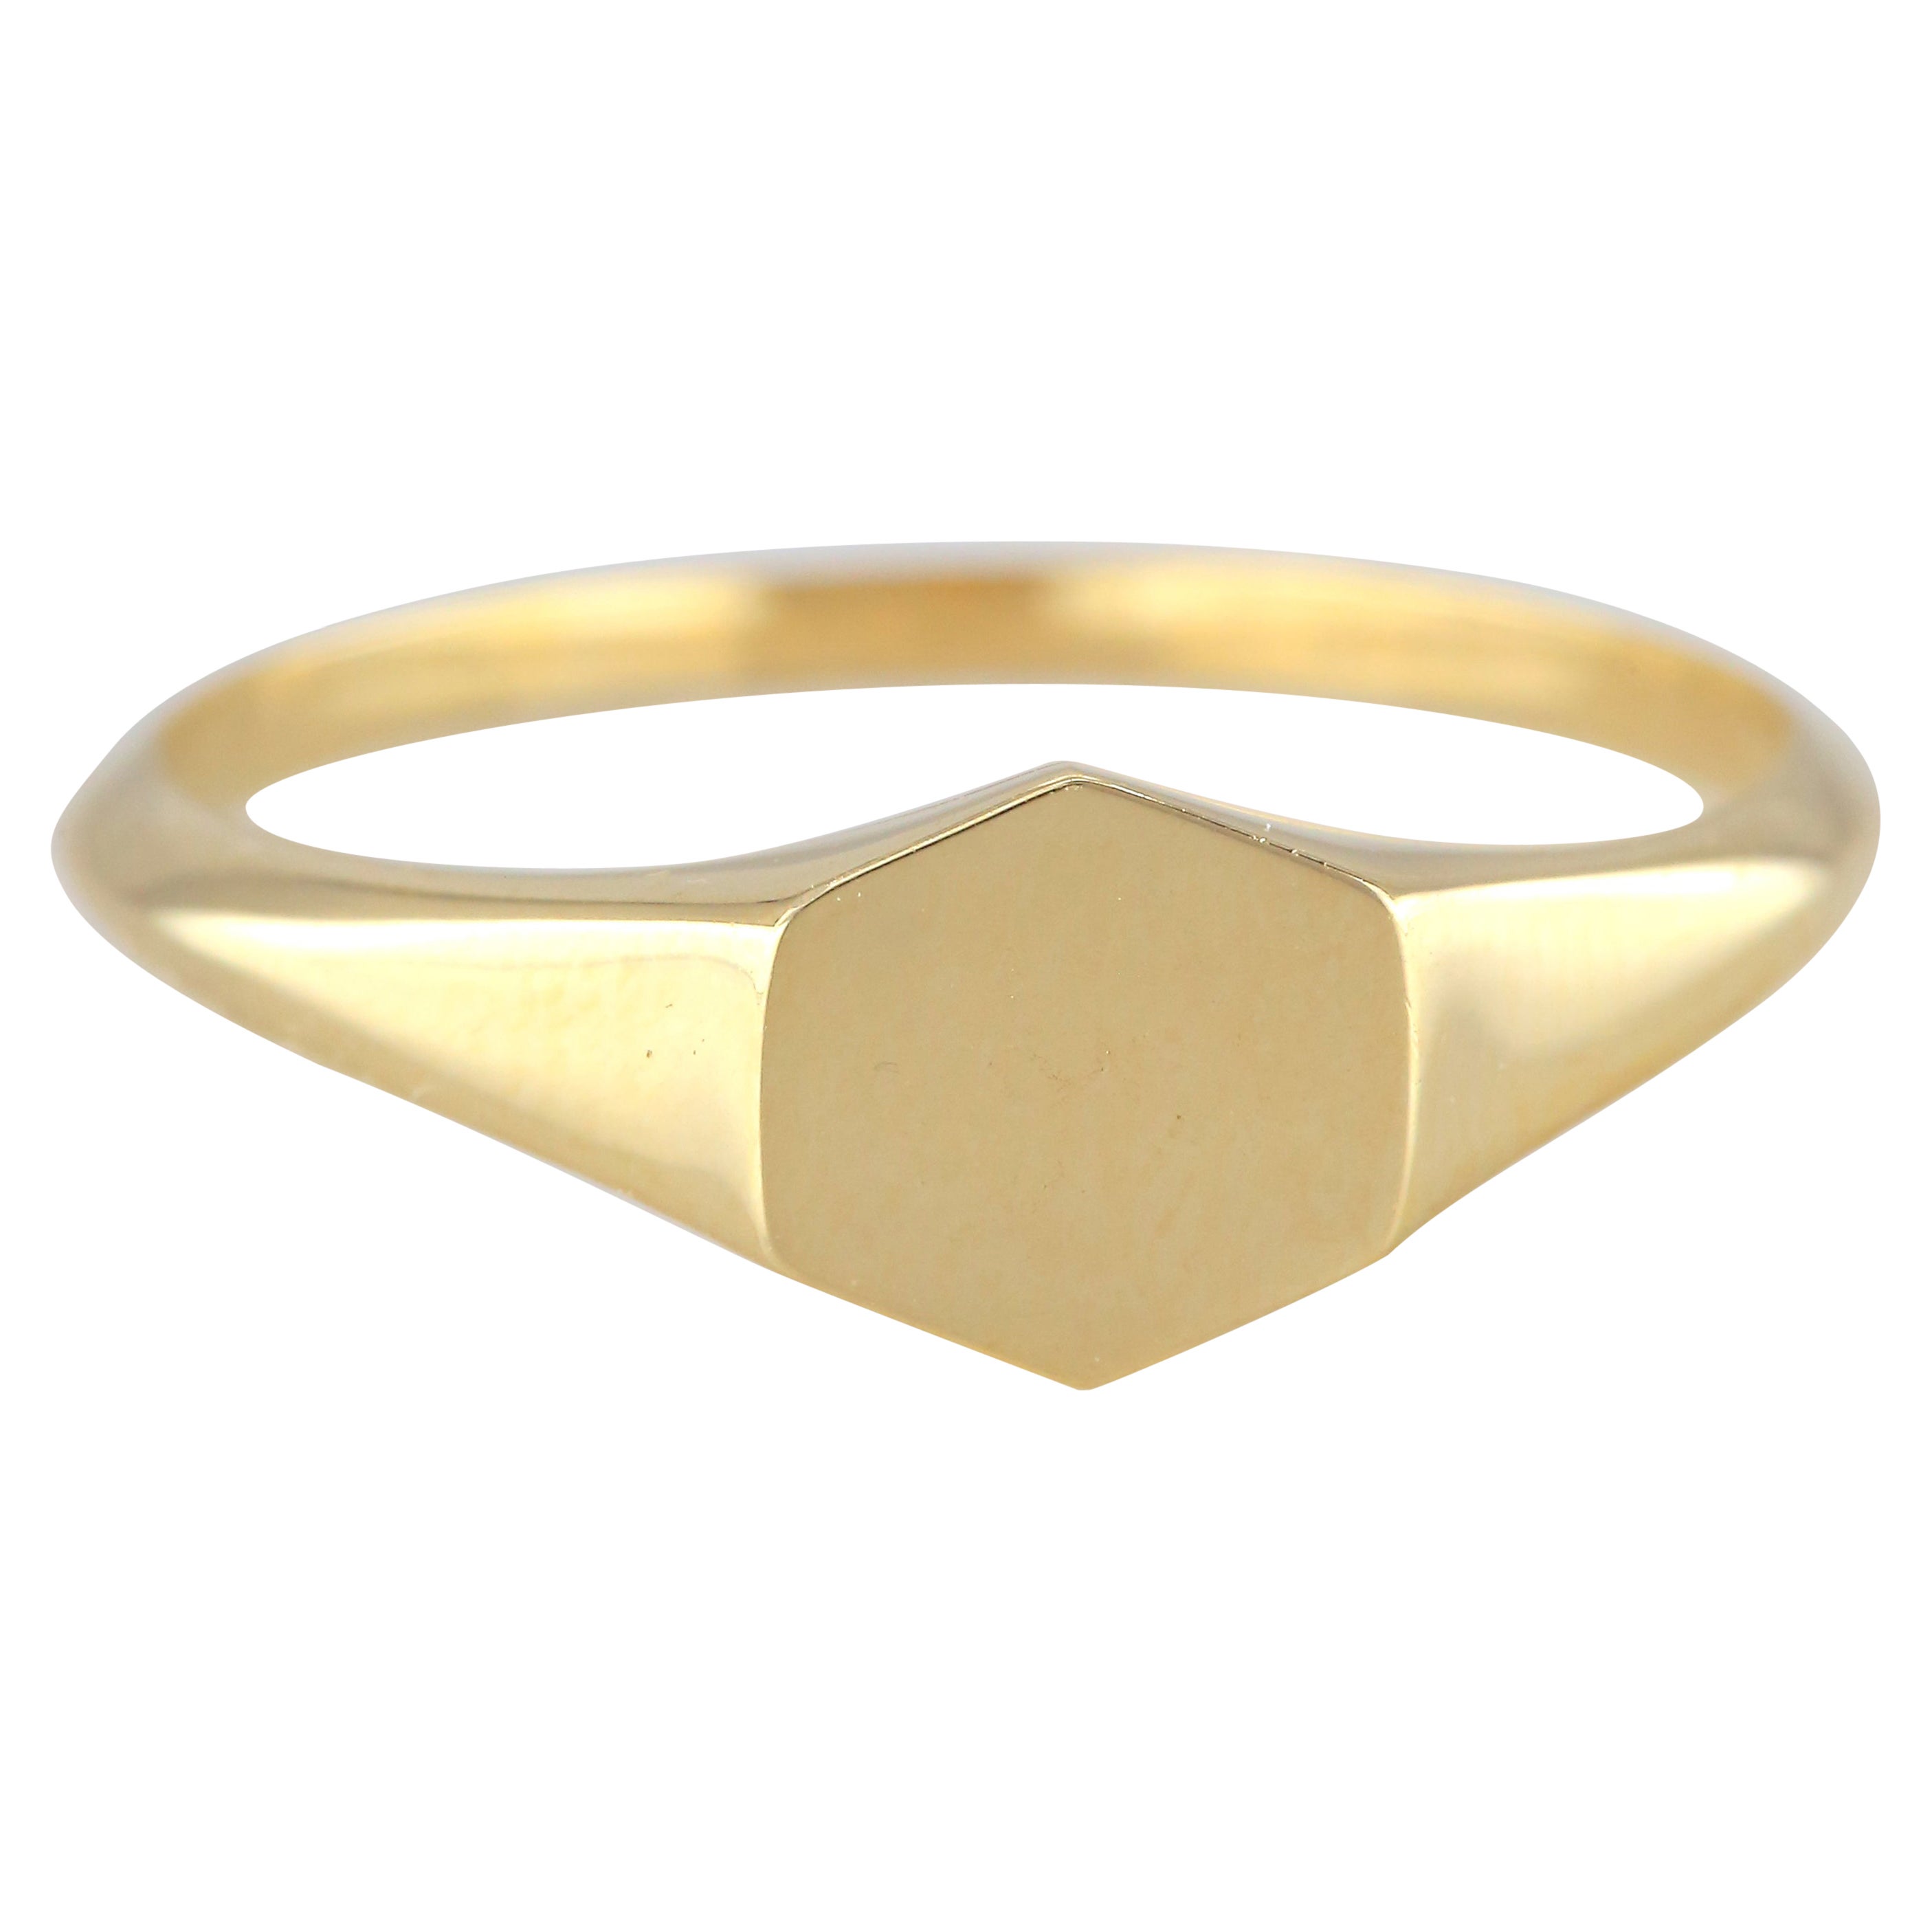 Pinky Signet Ring, 14K Gold Pinky Hexagon Signet Ring, Small Hexagonal Ring